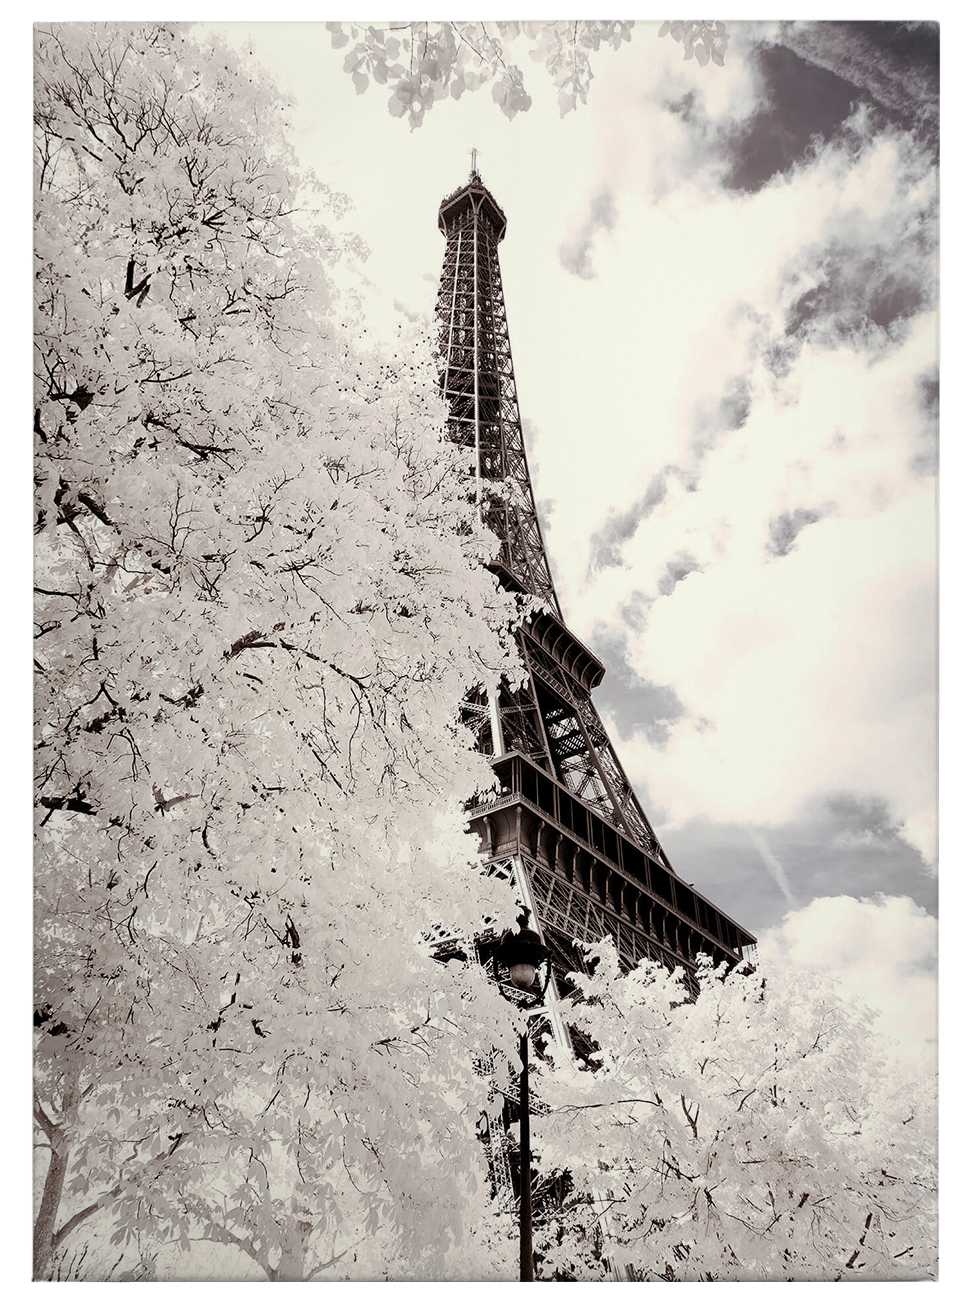             Toile Tour Eiffel au printemps, photo Hugonnard - 0,50 m x 0,70 m
        